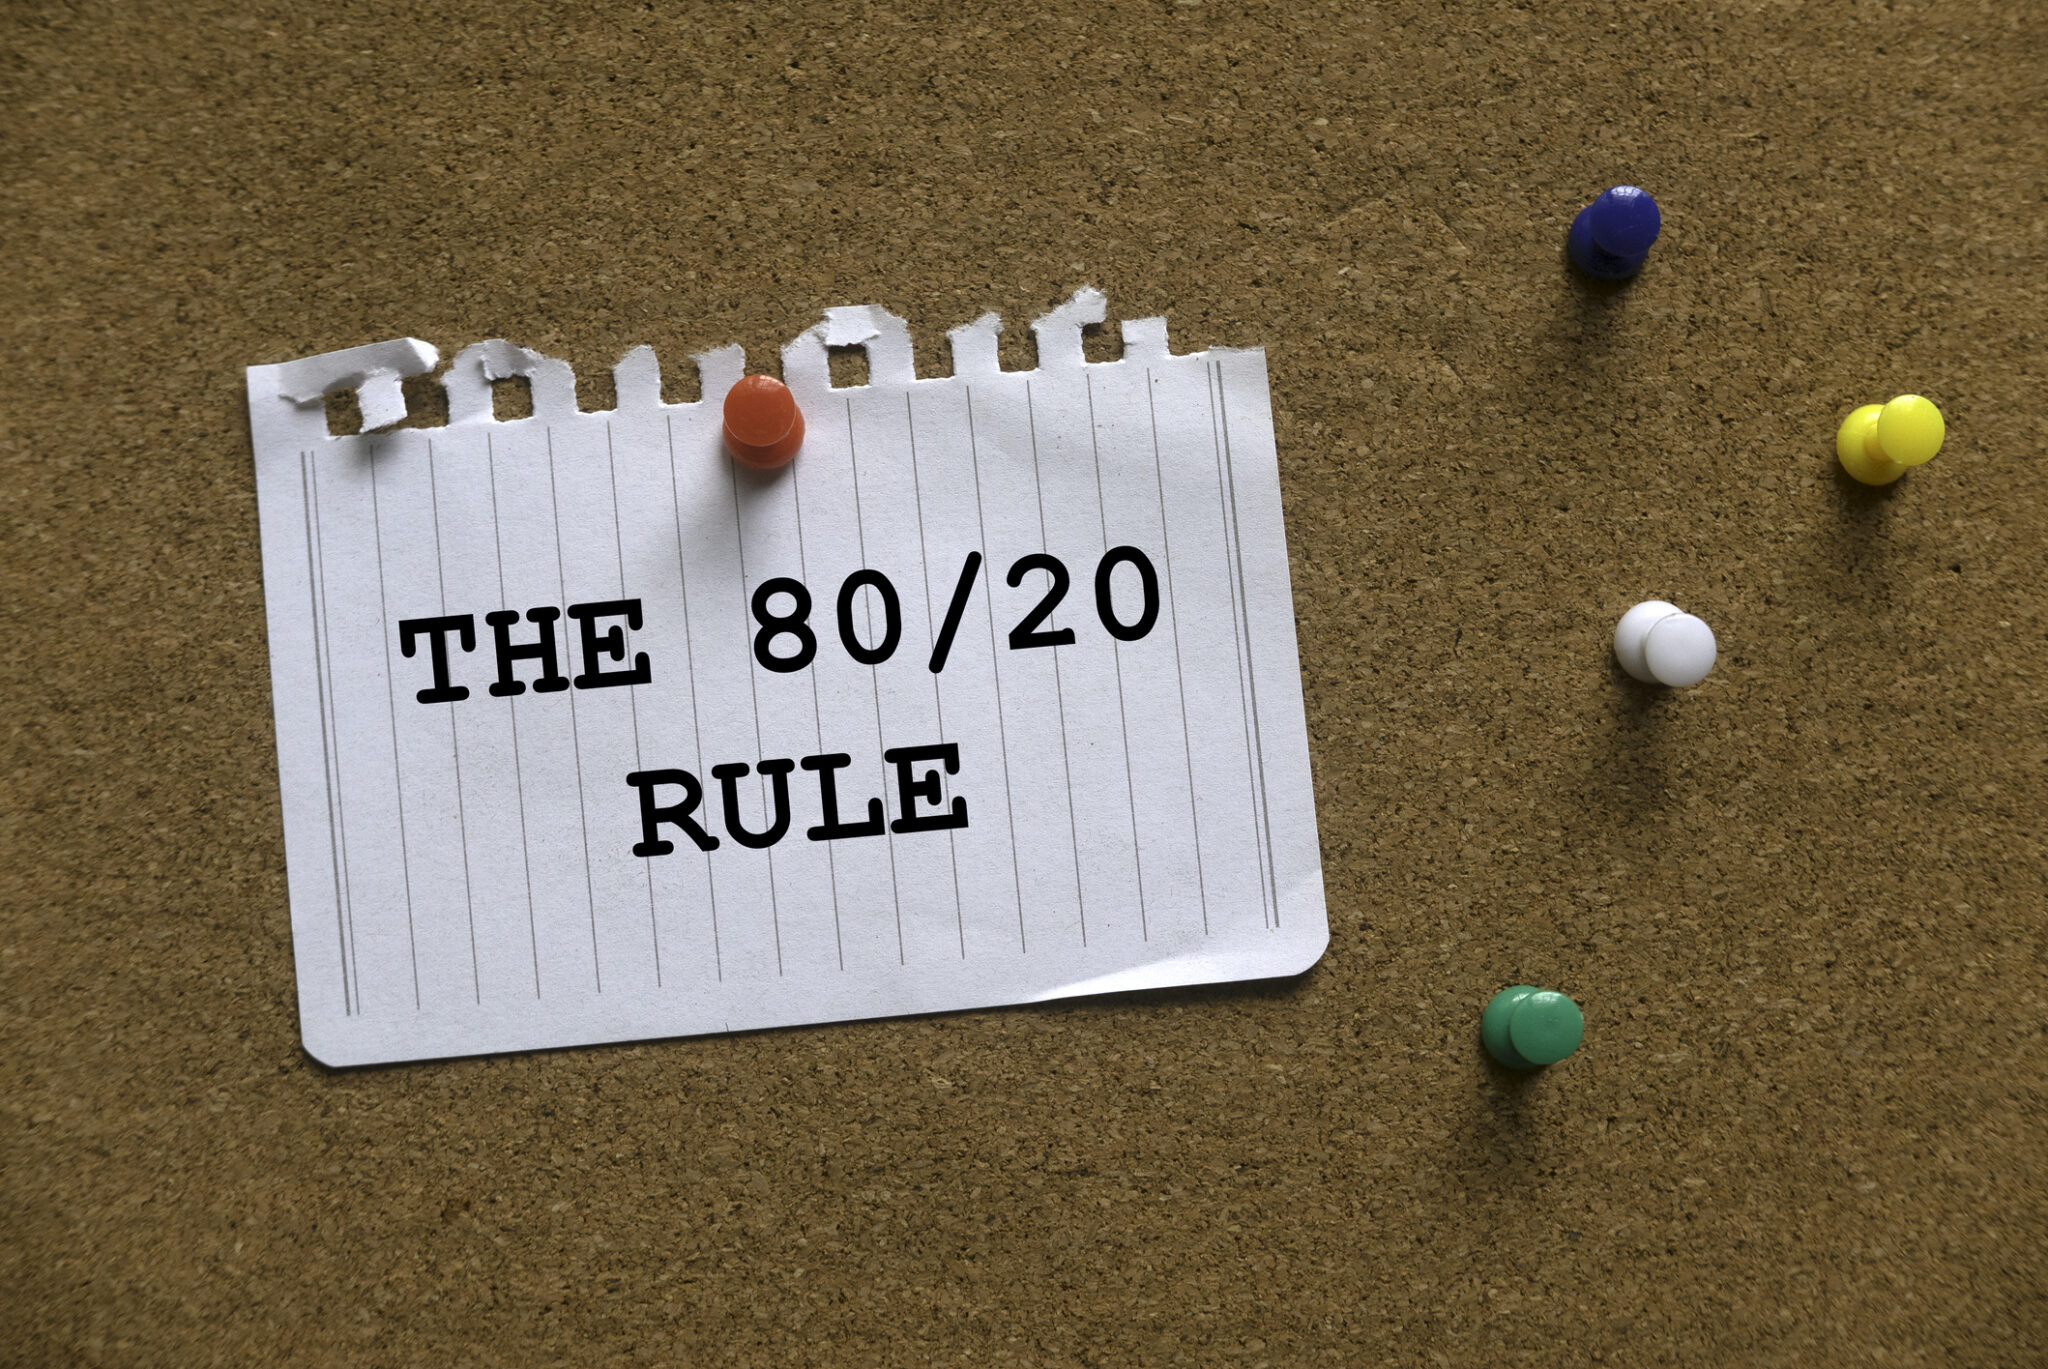 80/20 rule